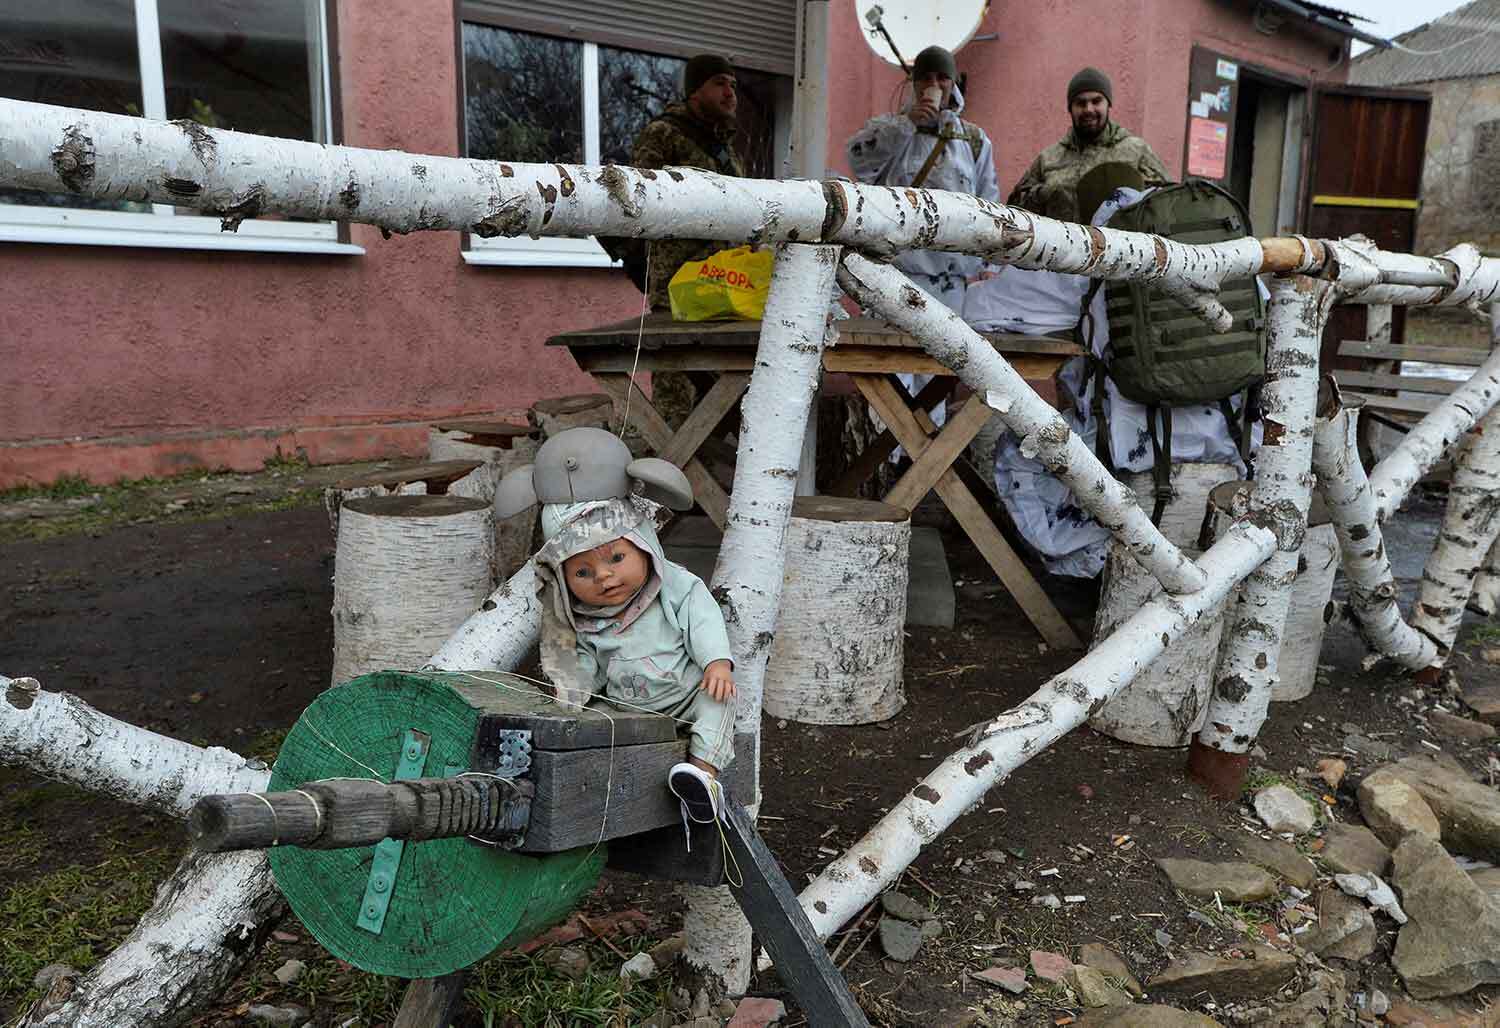 Soldati ucraini in un negozio di Verkhnotoretske, Donetsk - Febbraio 7, 2022. REUTERS/Oleksandr Klymenko